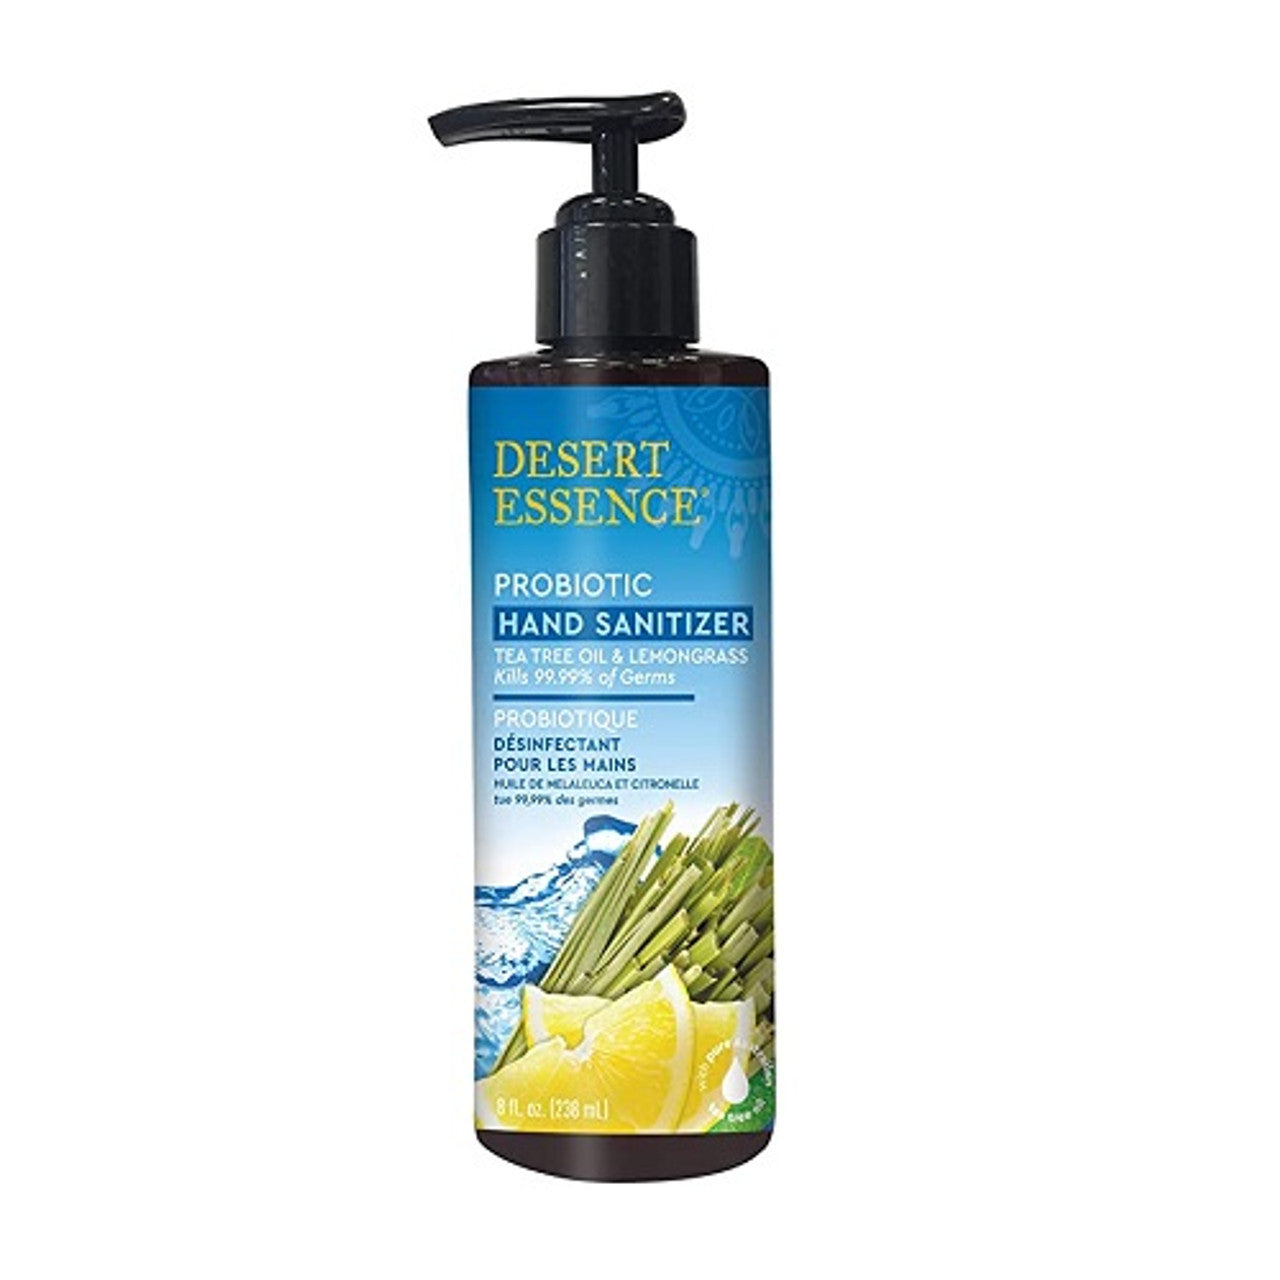 Desert Essence Probiotics Hand Sanitizer with Lemongrass and Tea Tree Oil, 8 Oz